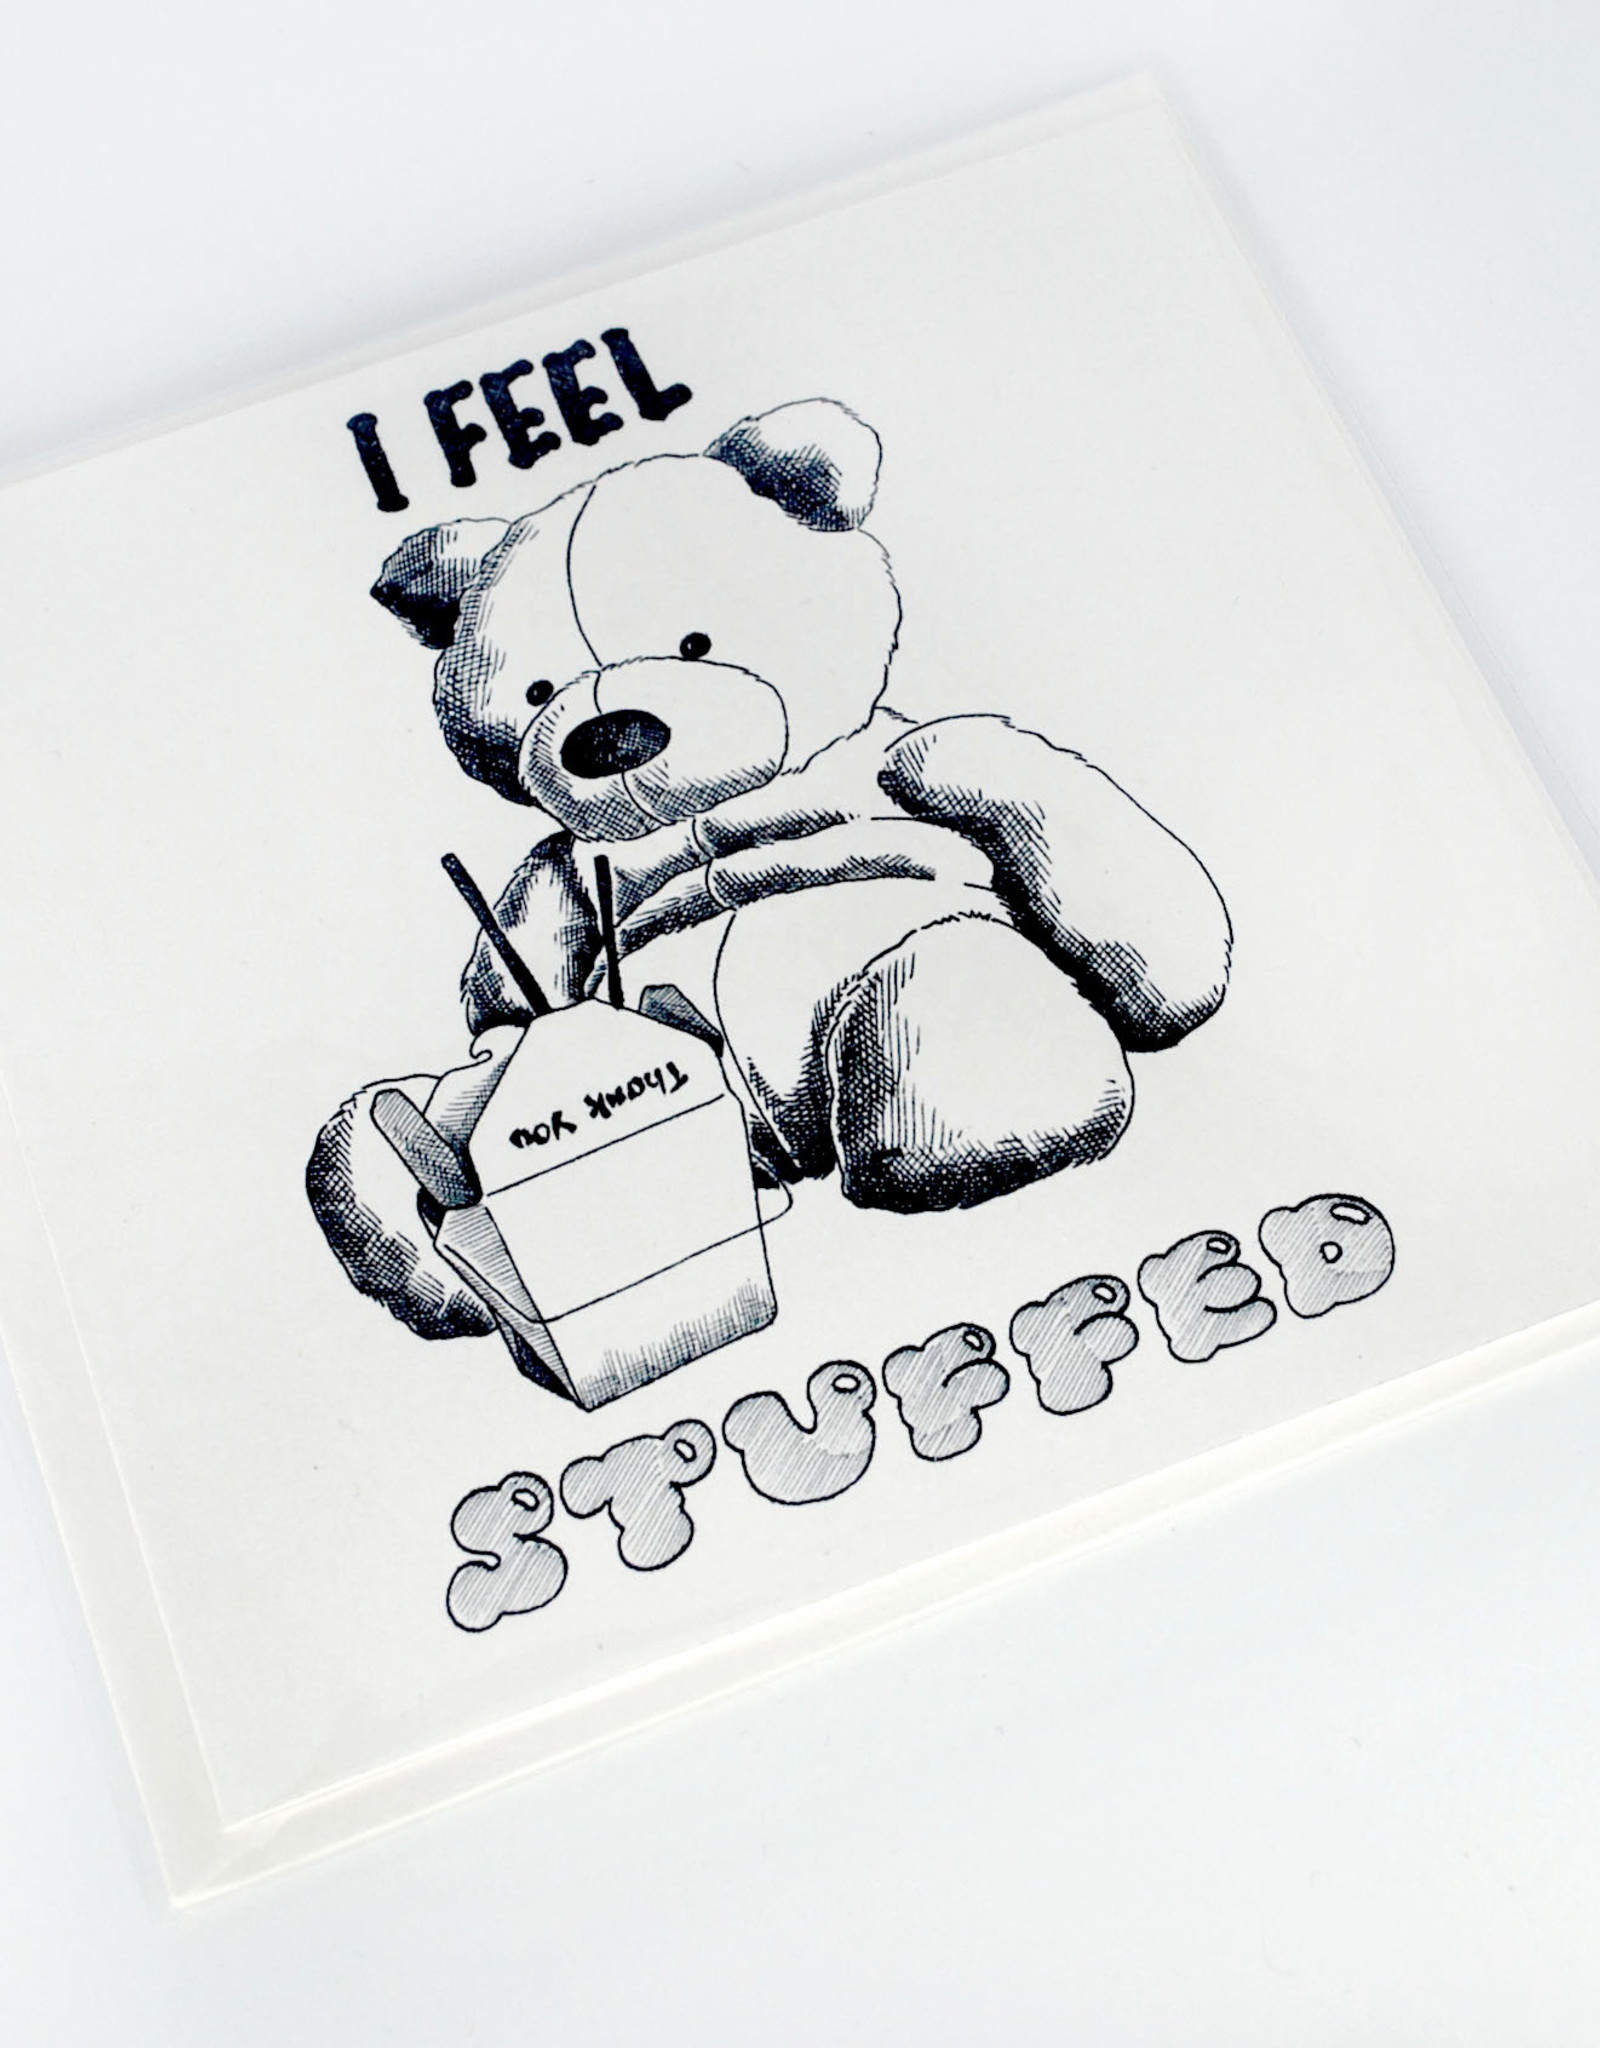 All4Pun "I feel stuffed" Birthday Card  by Scott Dickens, All4Pun